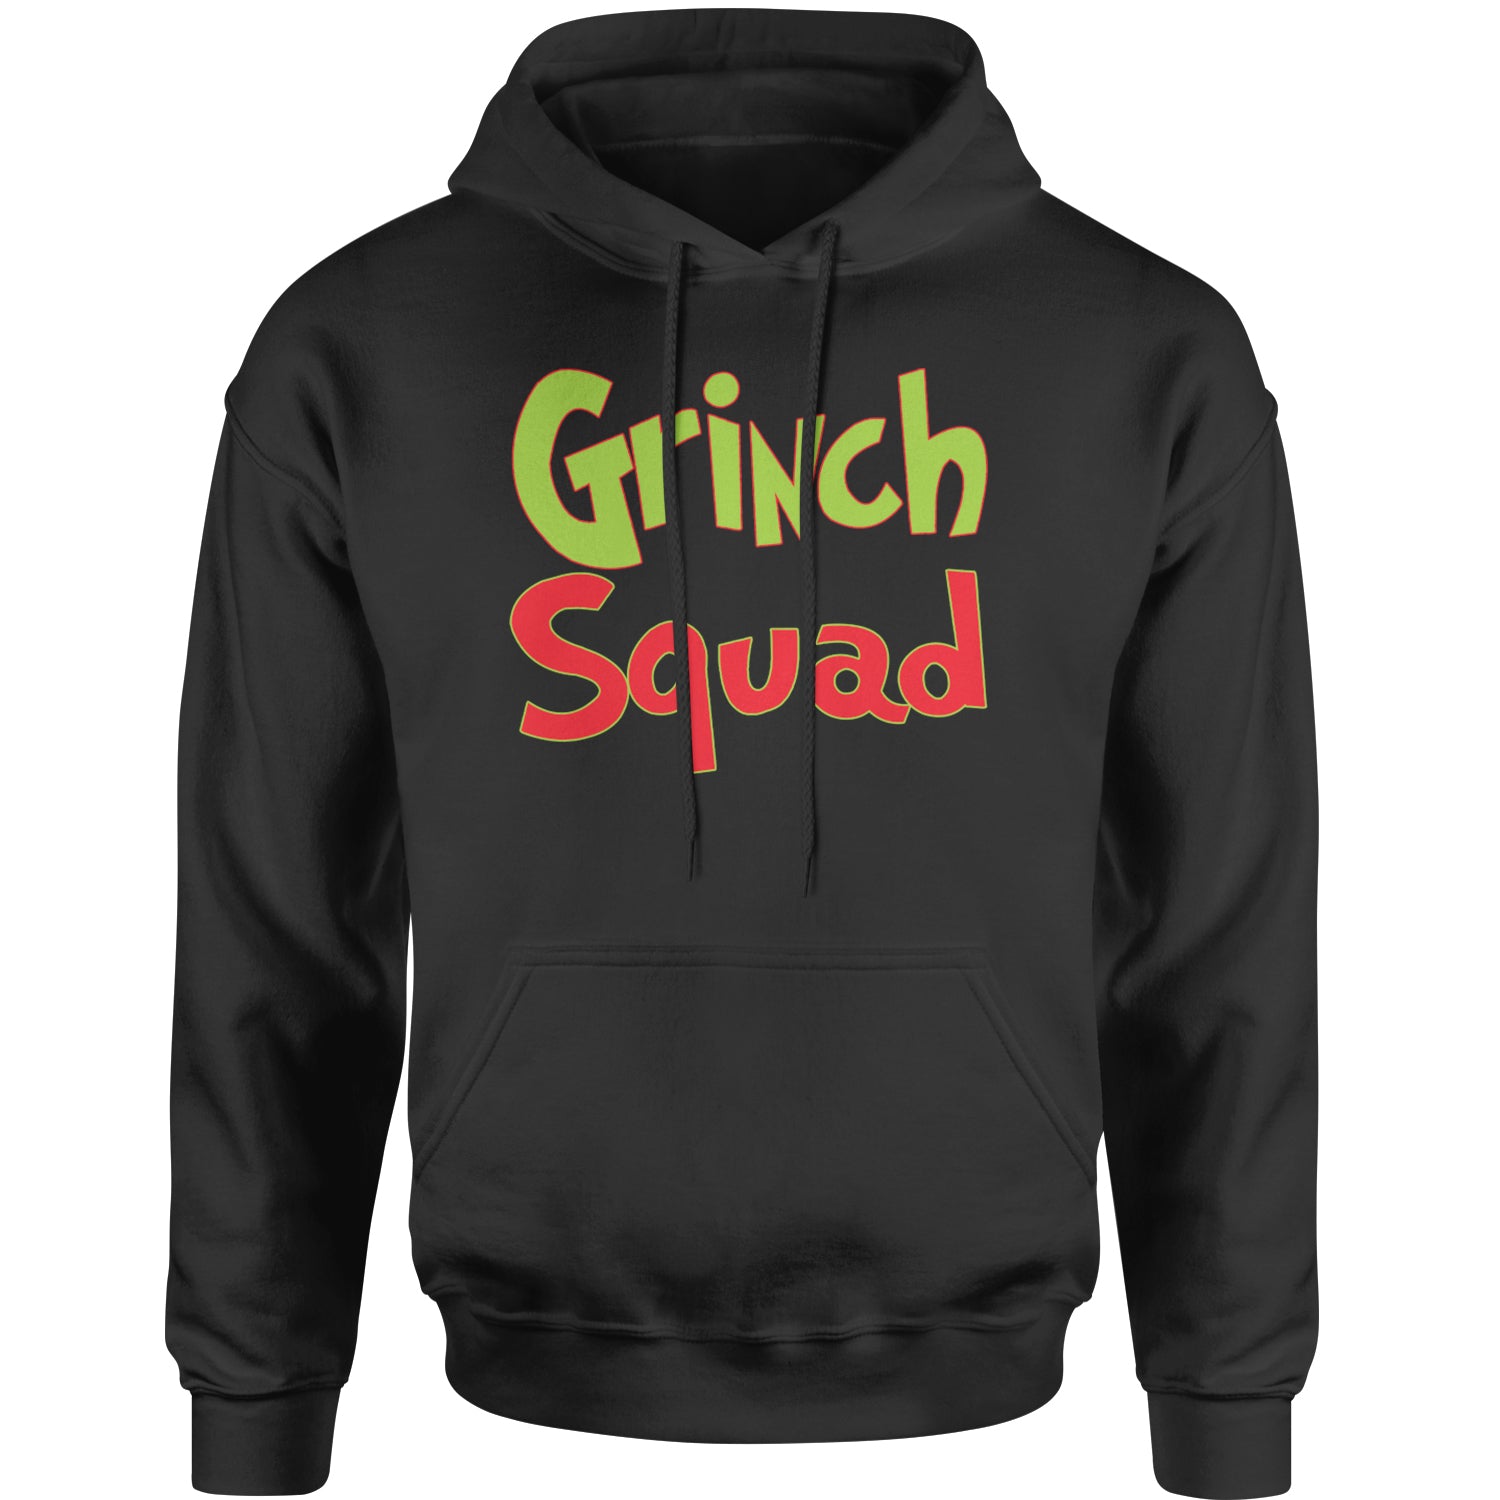 Gr-nch Squad Jolly Grinchmas Merry Christmas Adult Hoodie Sweatshirt